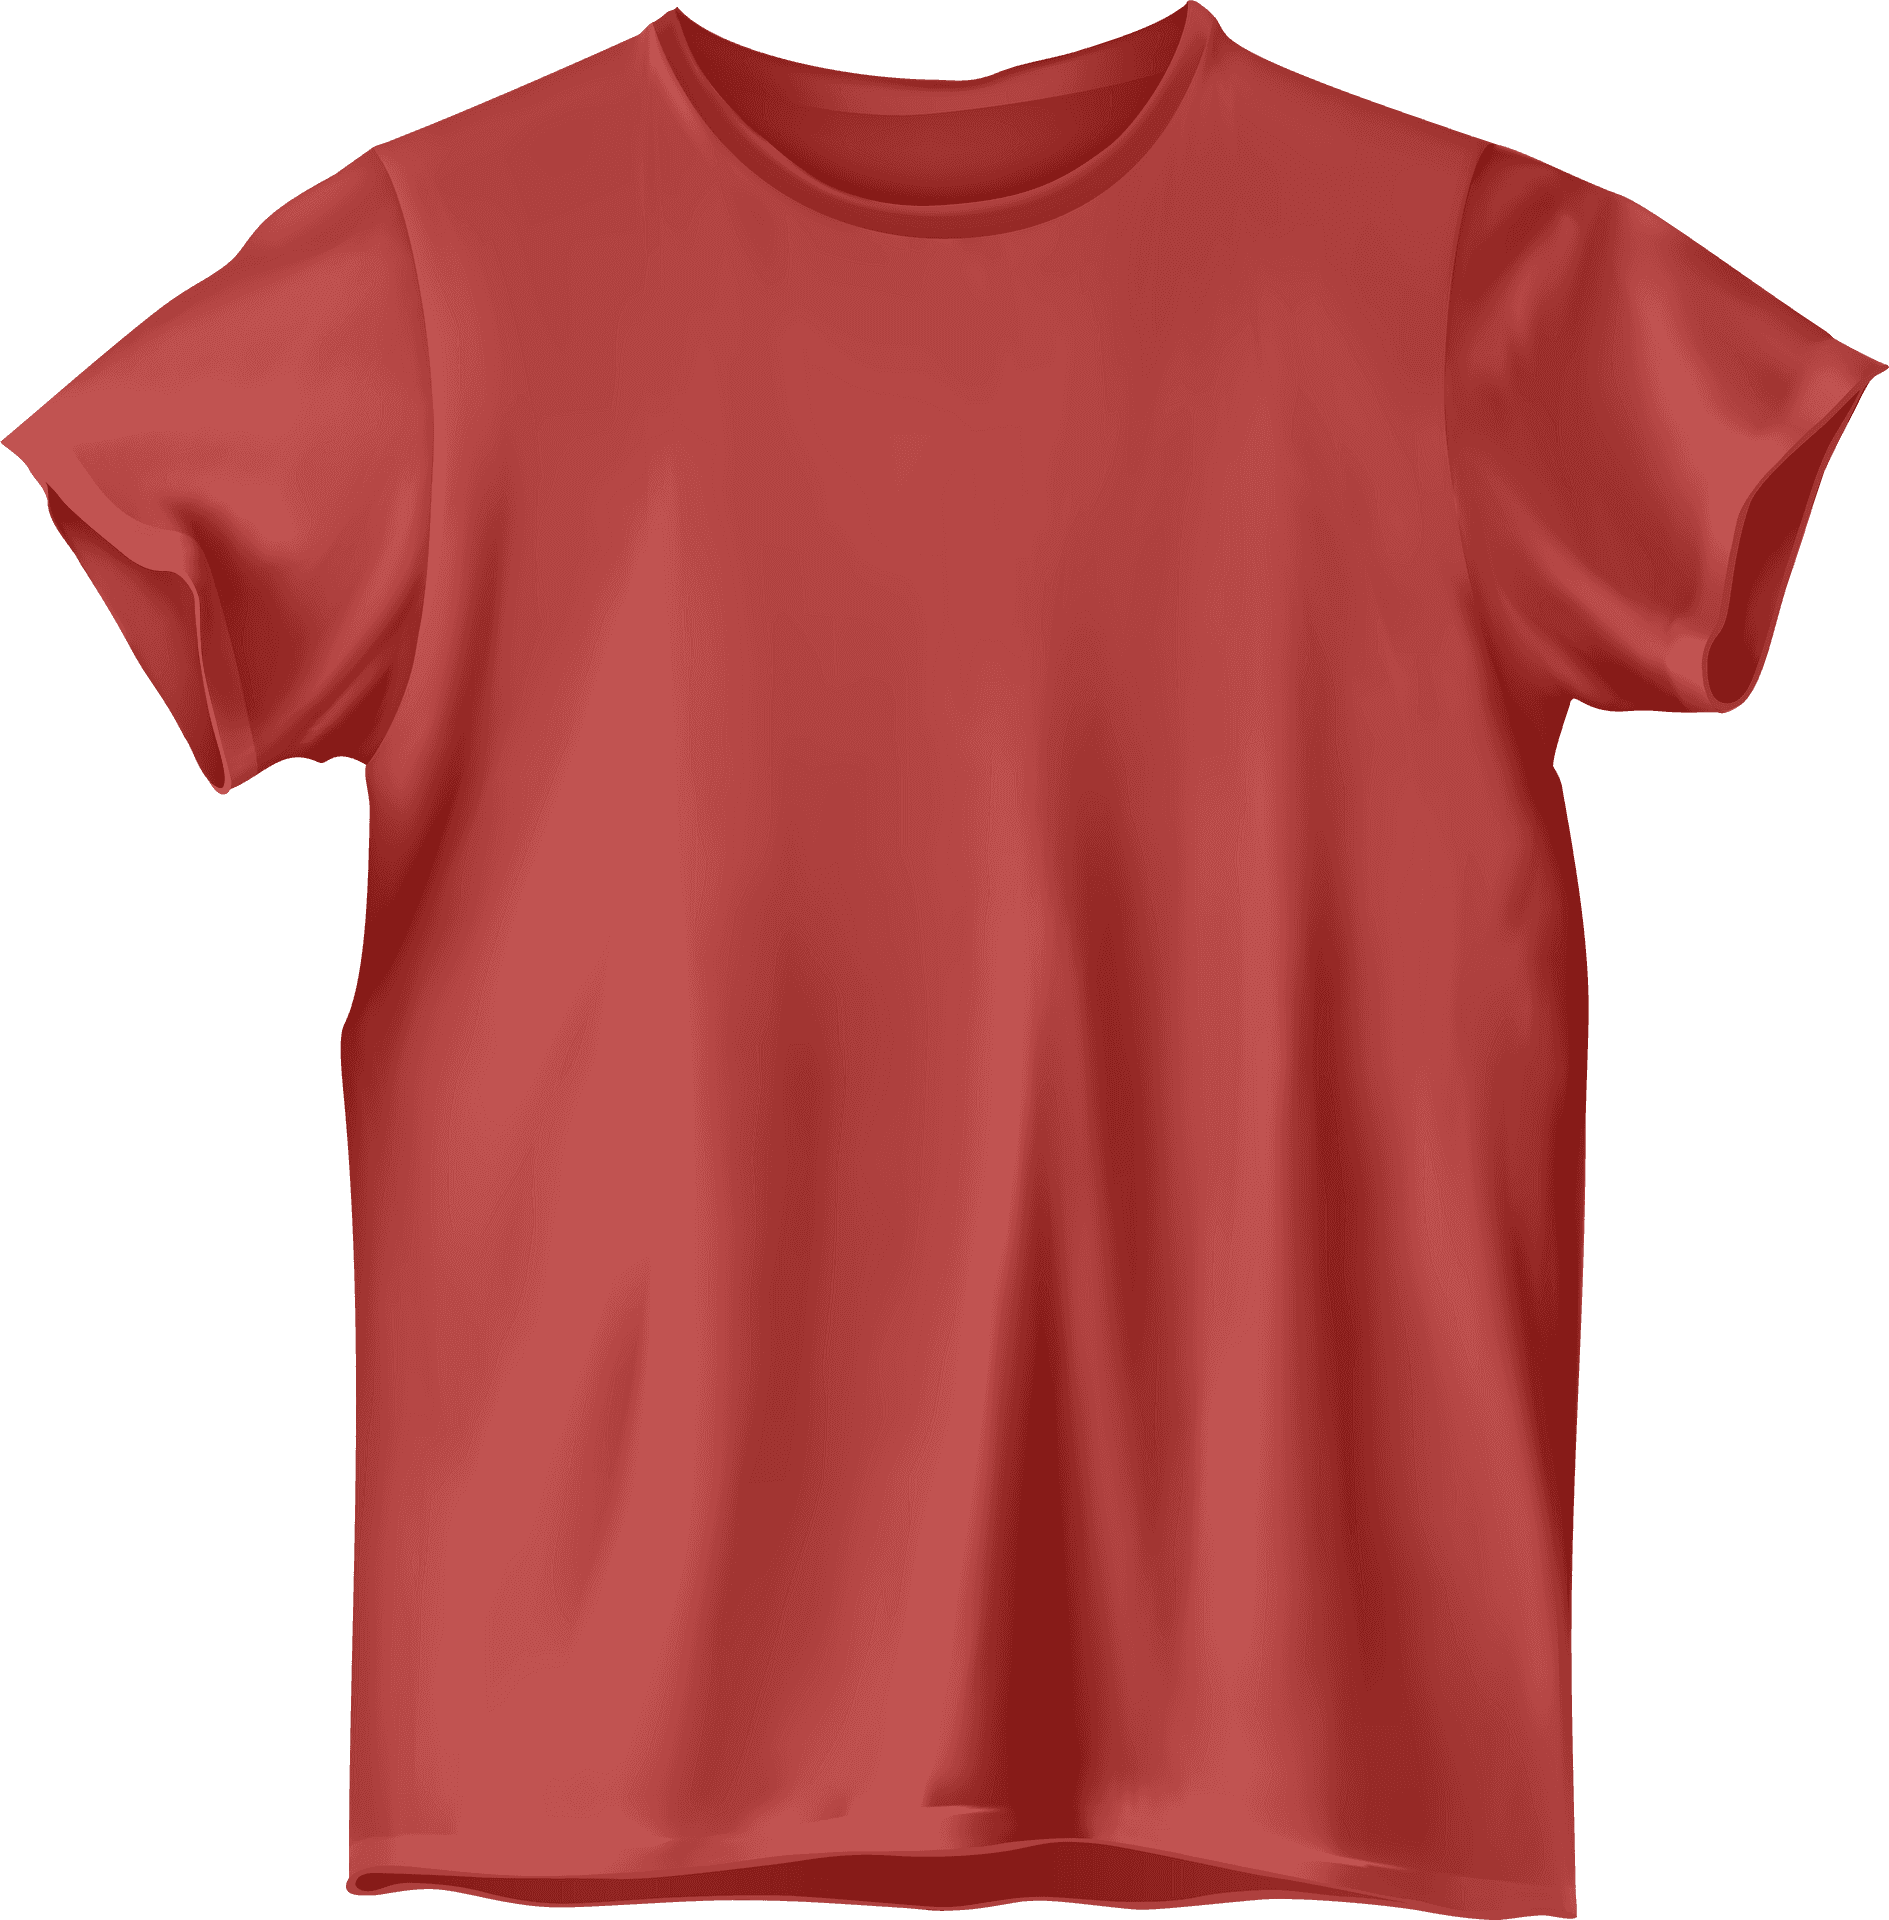 Red Plain T Shirt Mockup PNG image